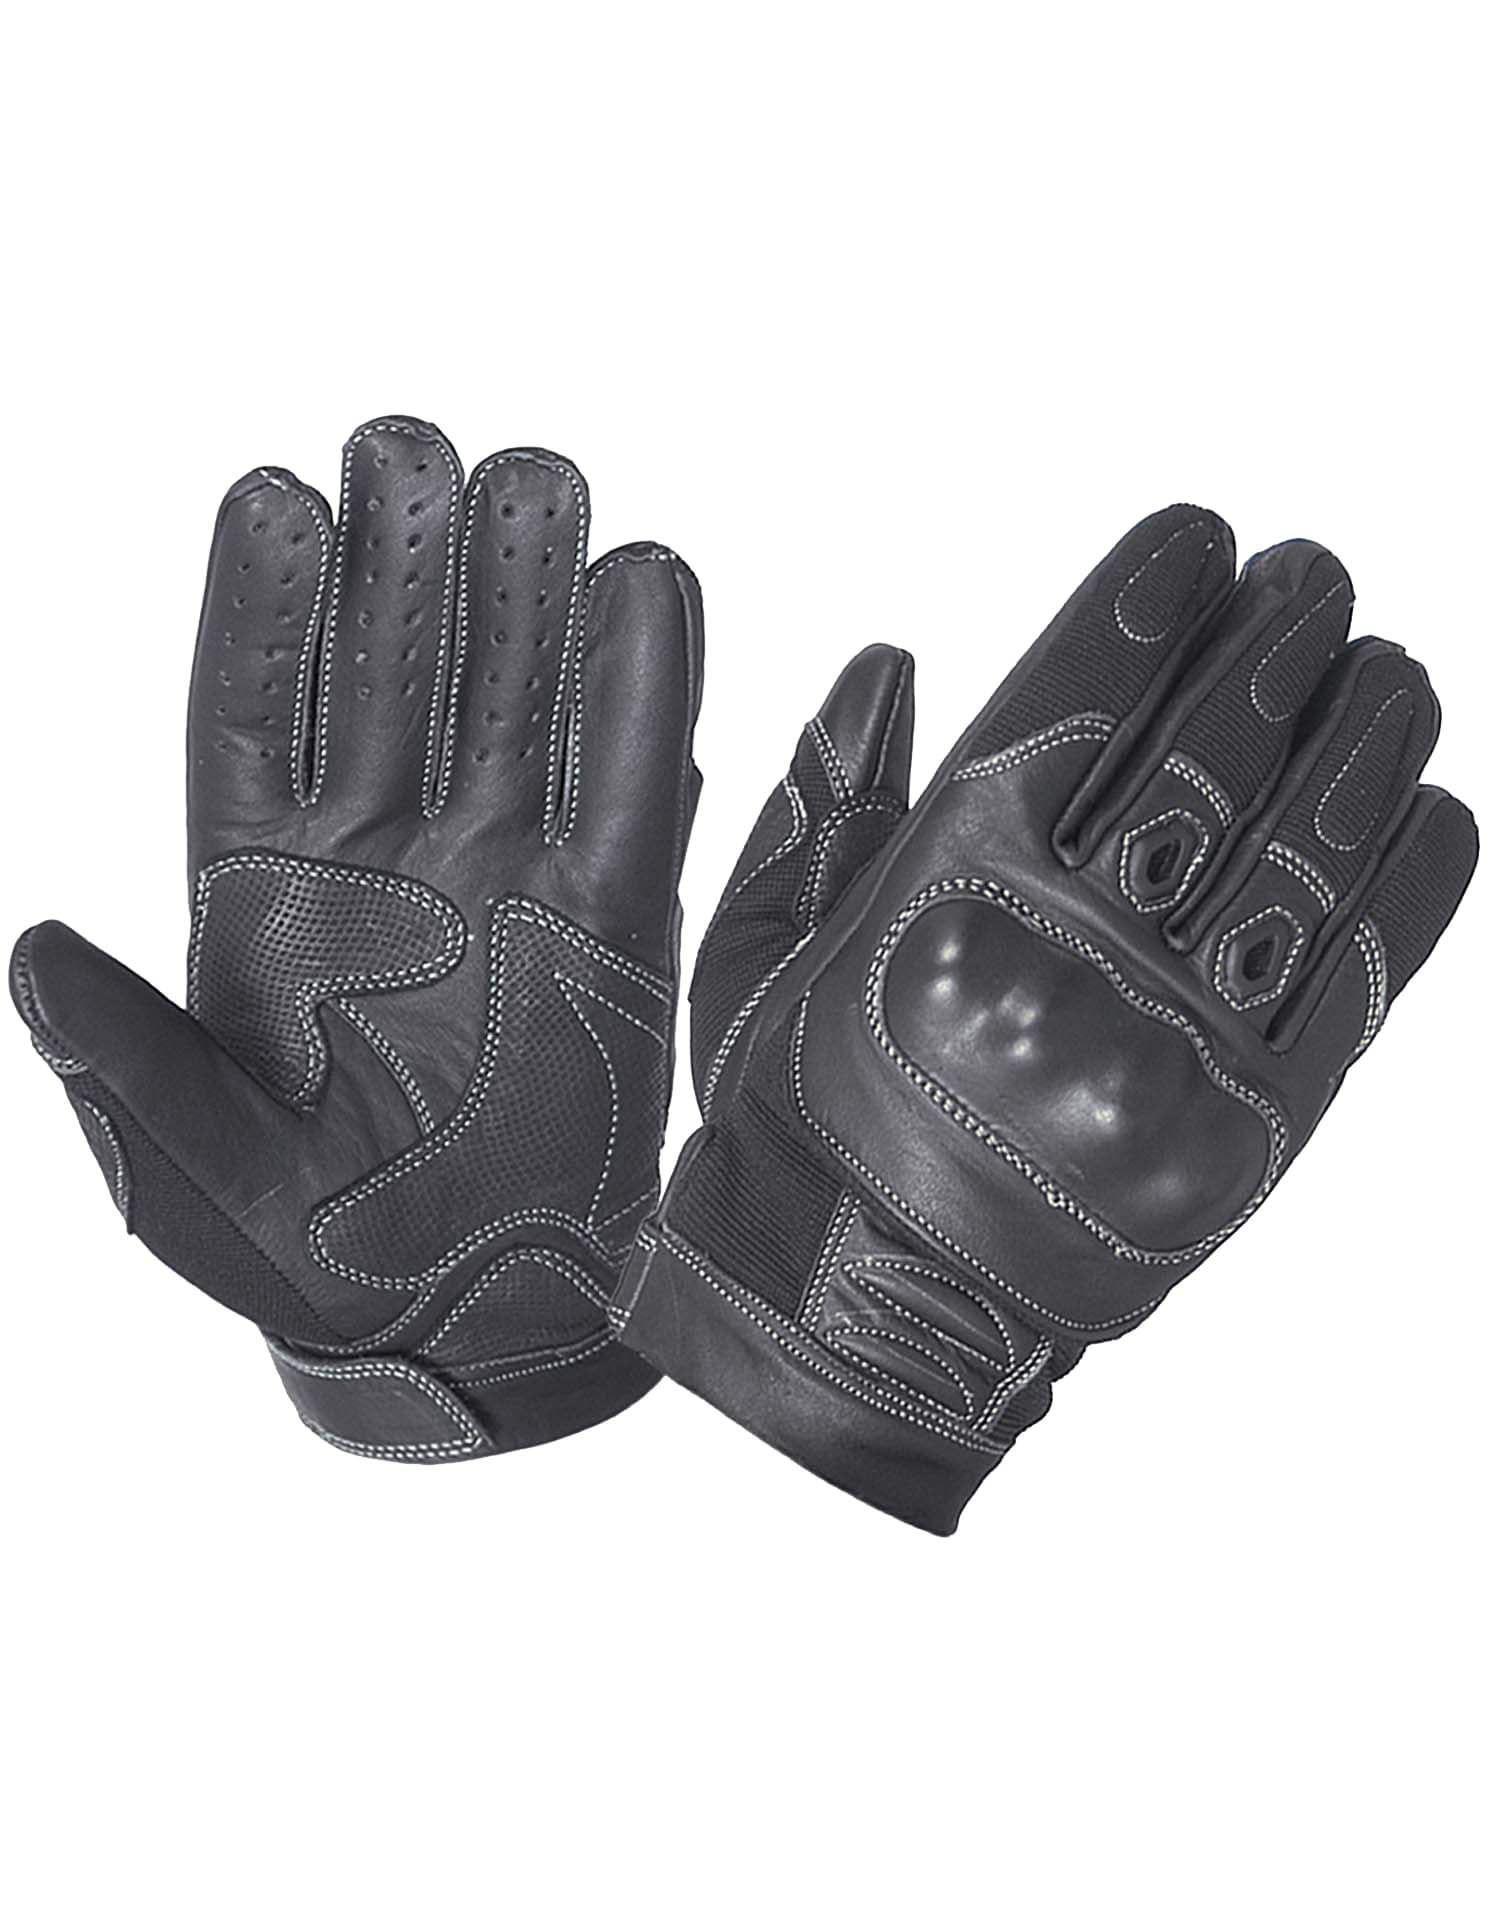 Men's Full Finger Leather Gloves with knuckle armor